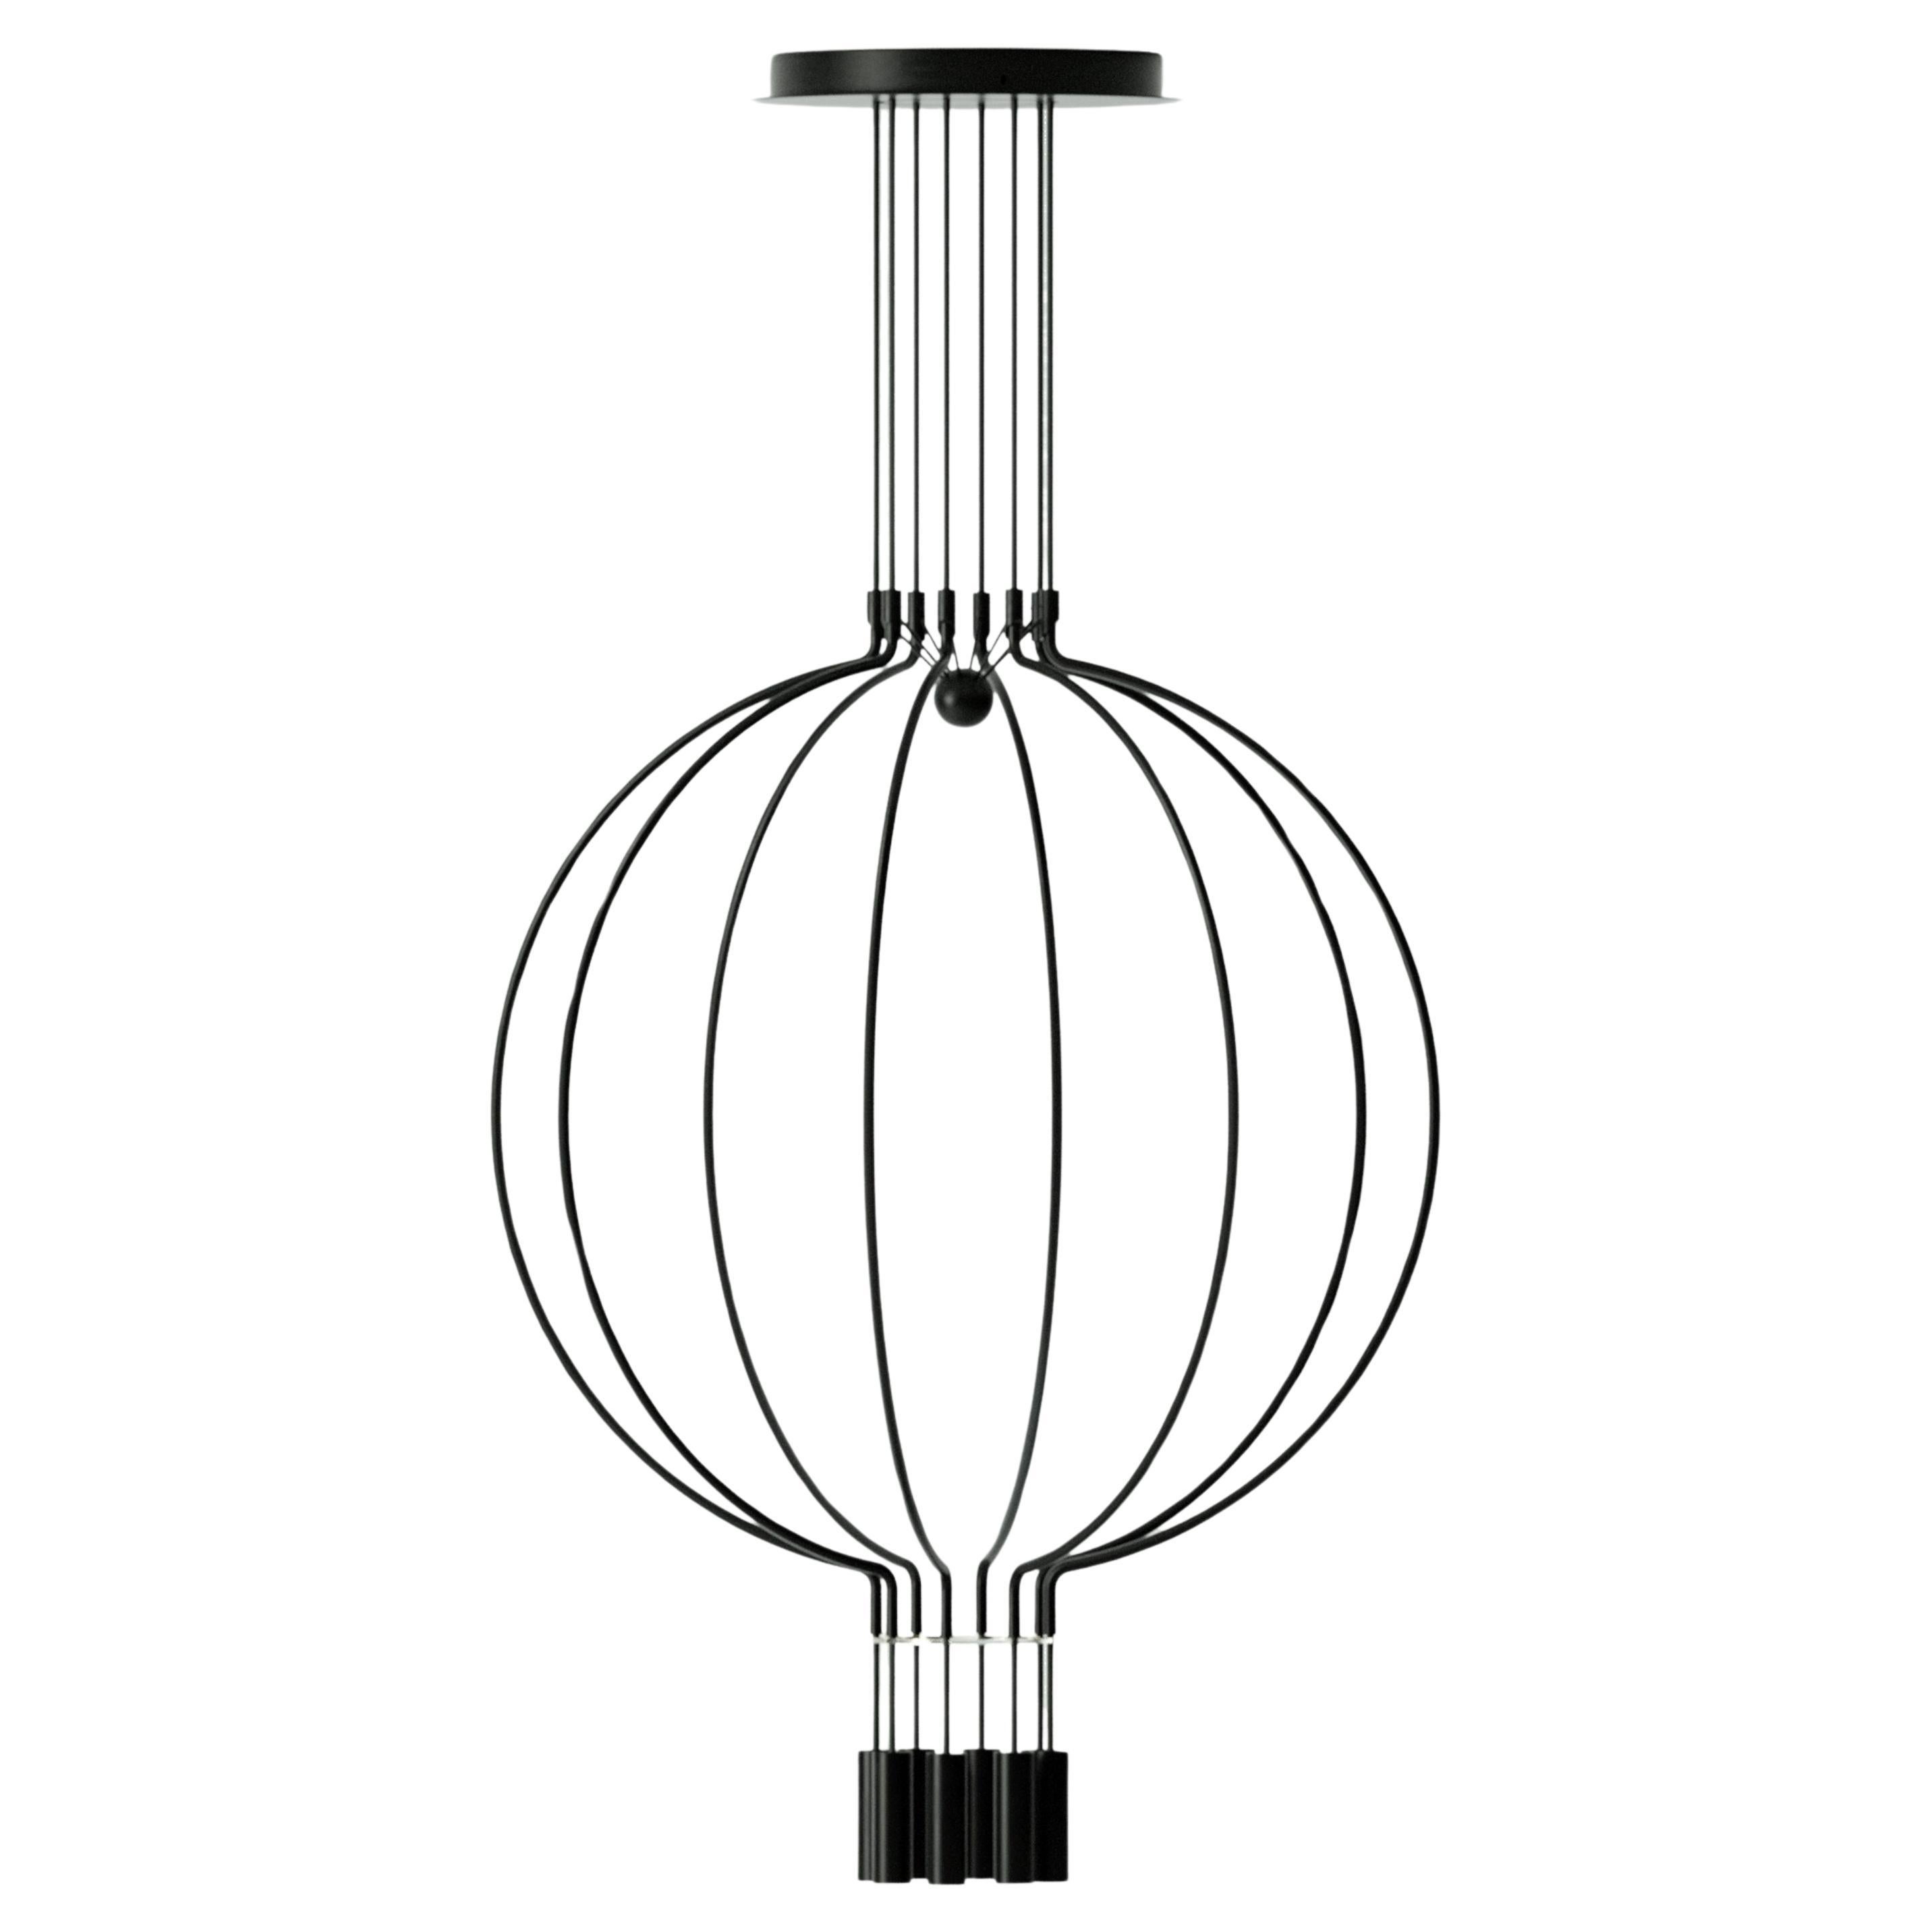 Axolight Liaison Model M8 Pendant Lamp in Black/Black by Sara Moroni For Sale